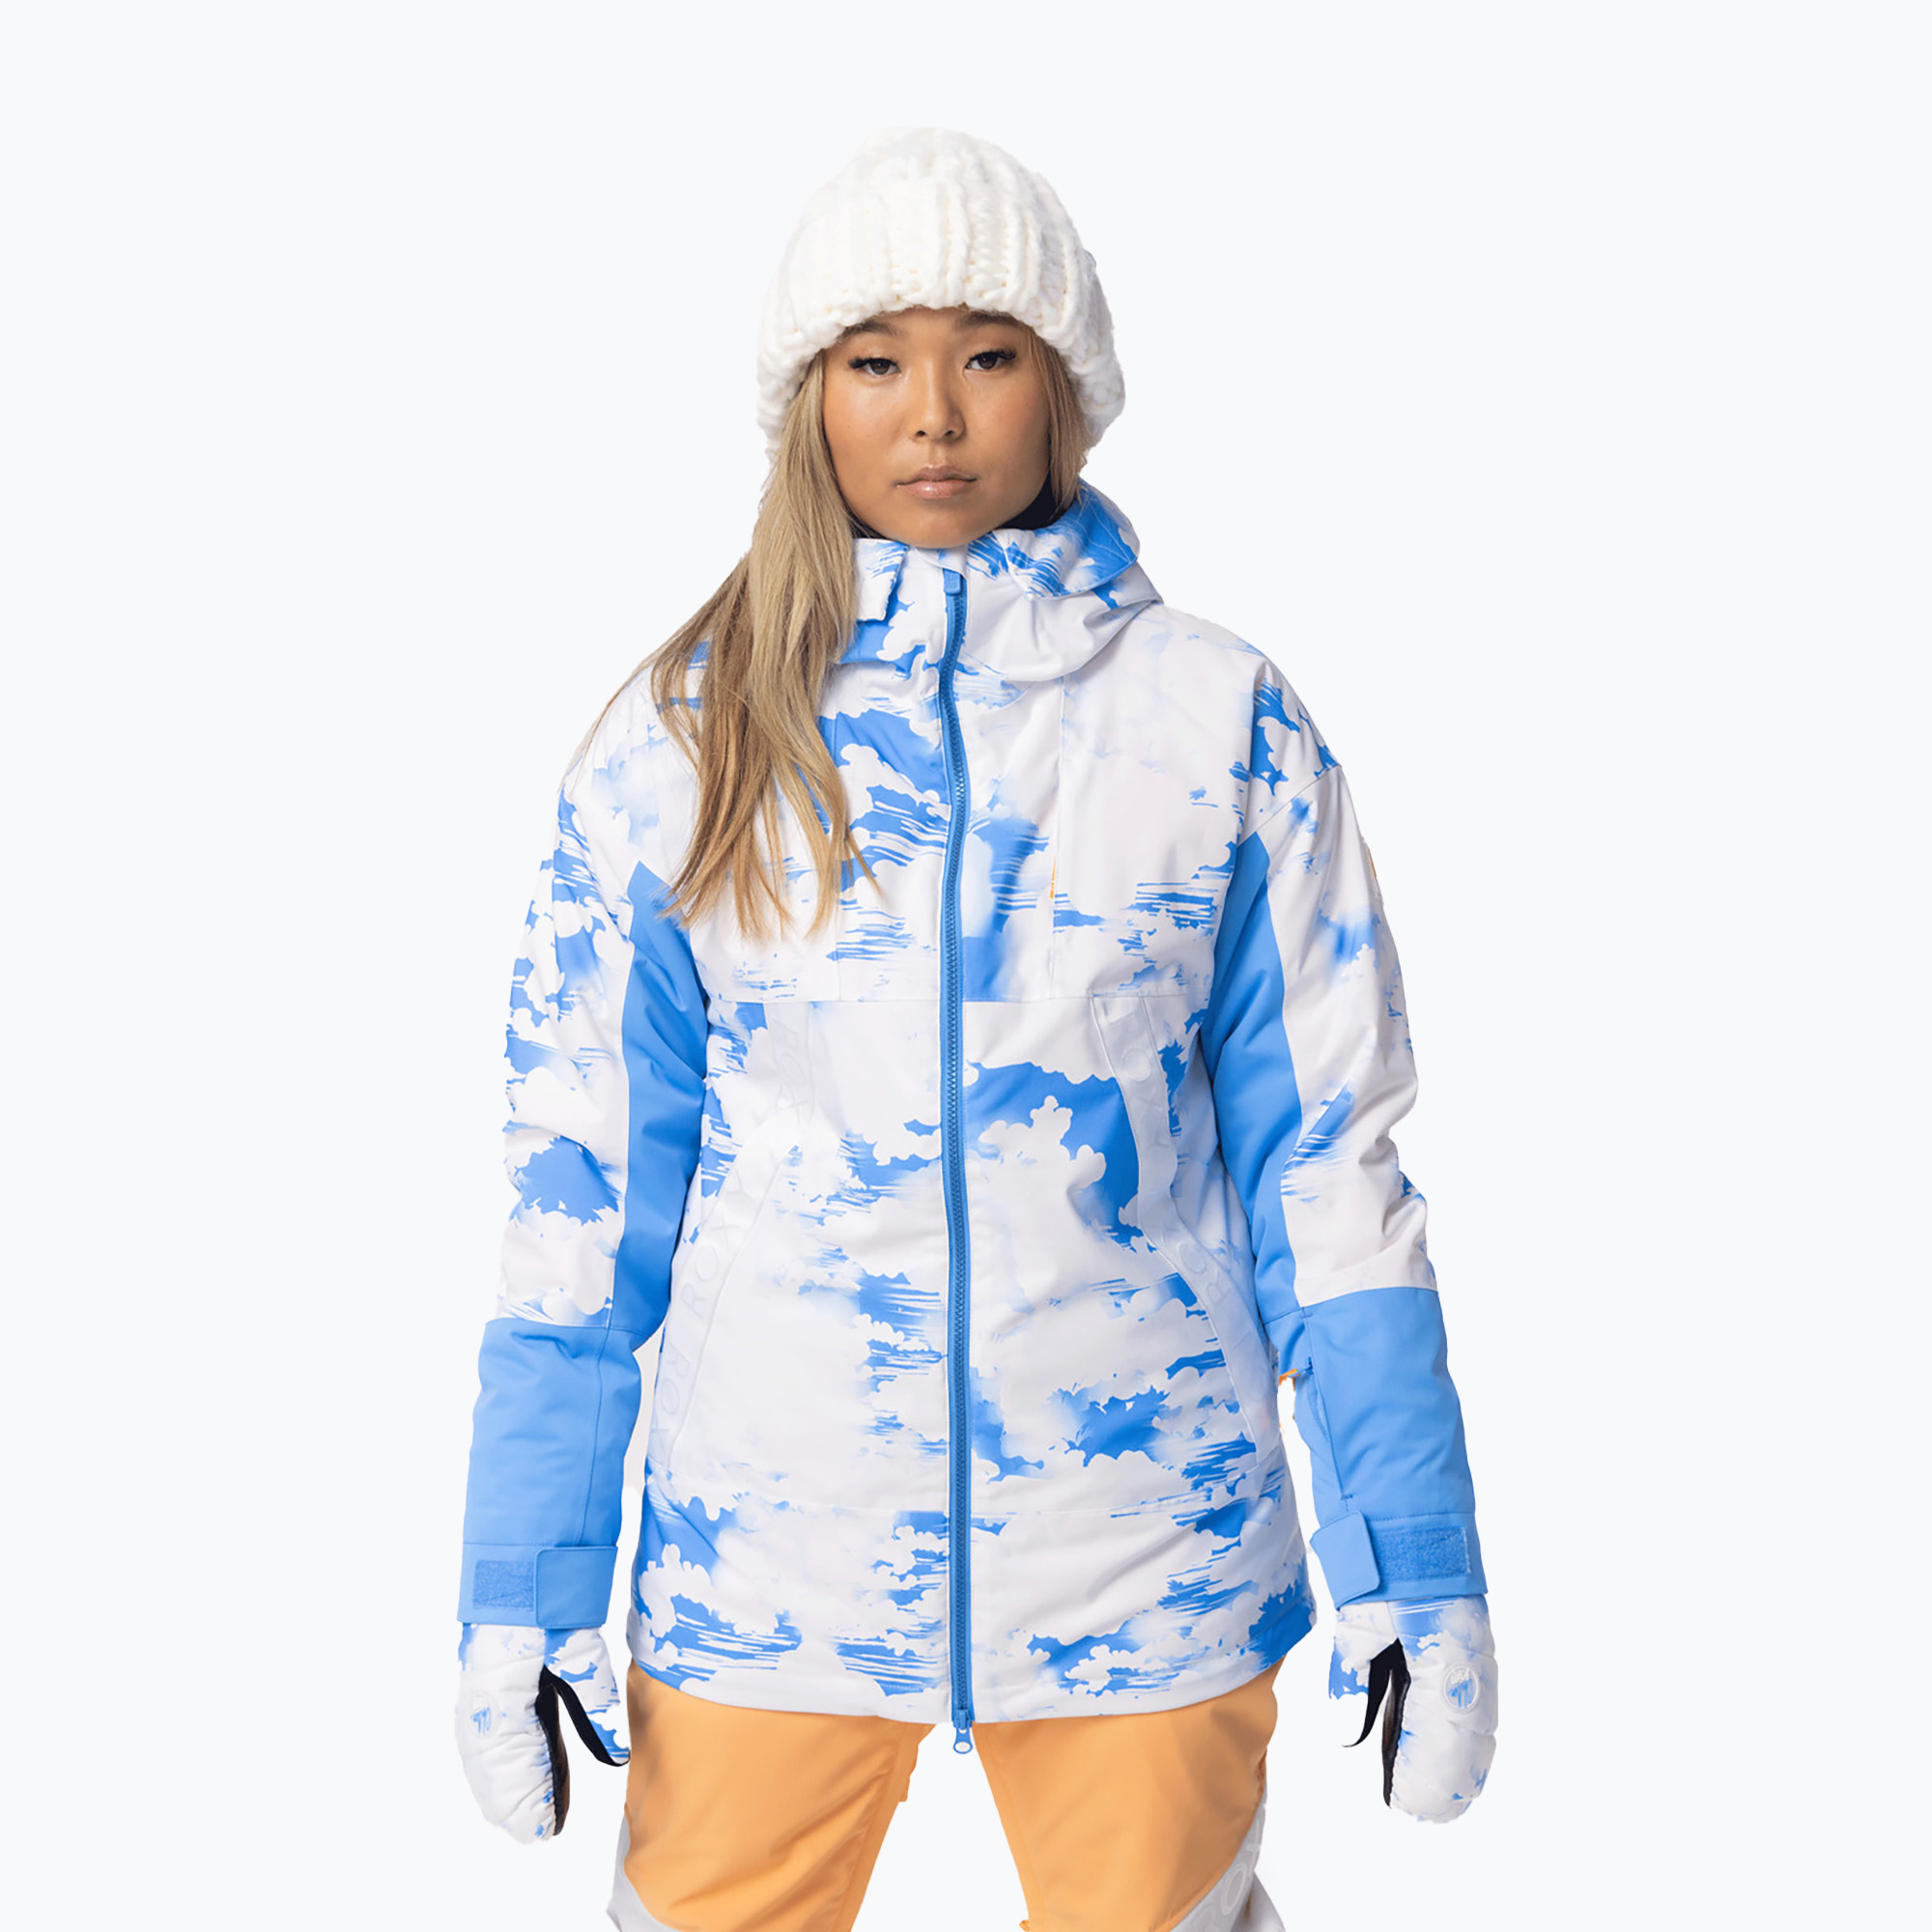 Дамско яке за сноуборд ROXY Chloe Kim лазурно сини облаци